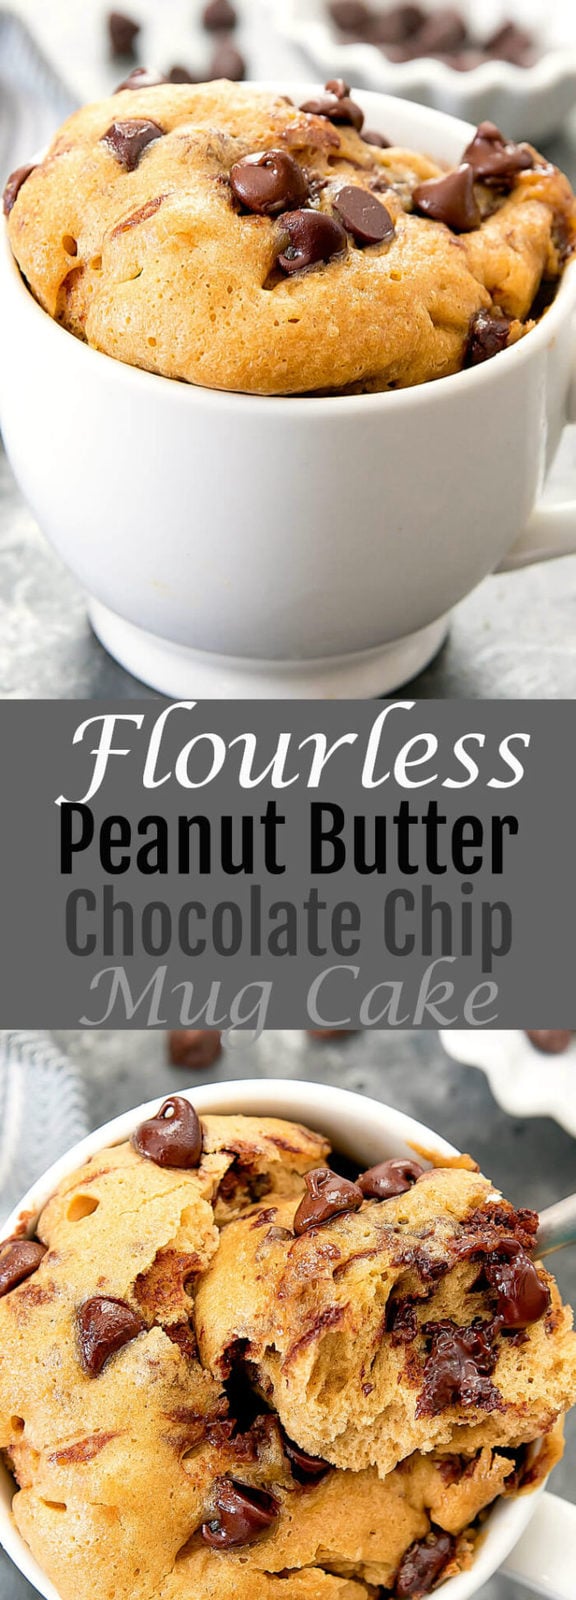 Flourless Peanut Butter Chocolate Chip Mug Cake